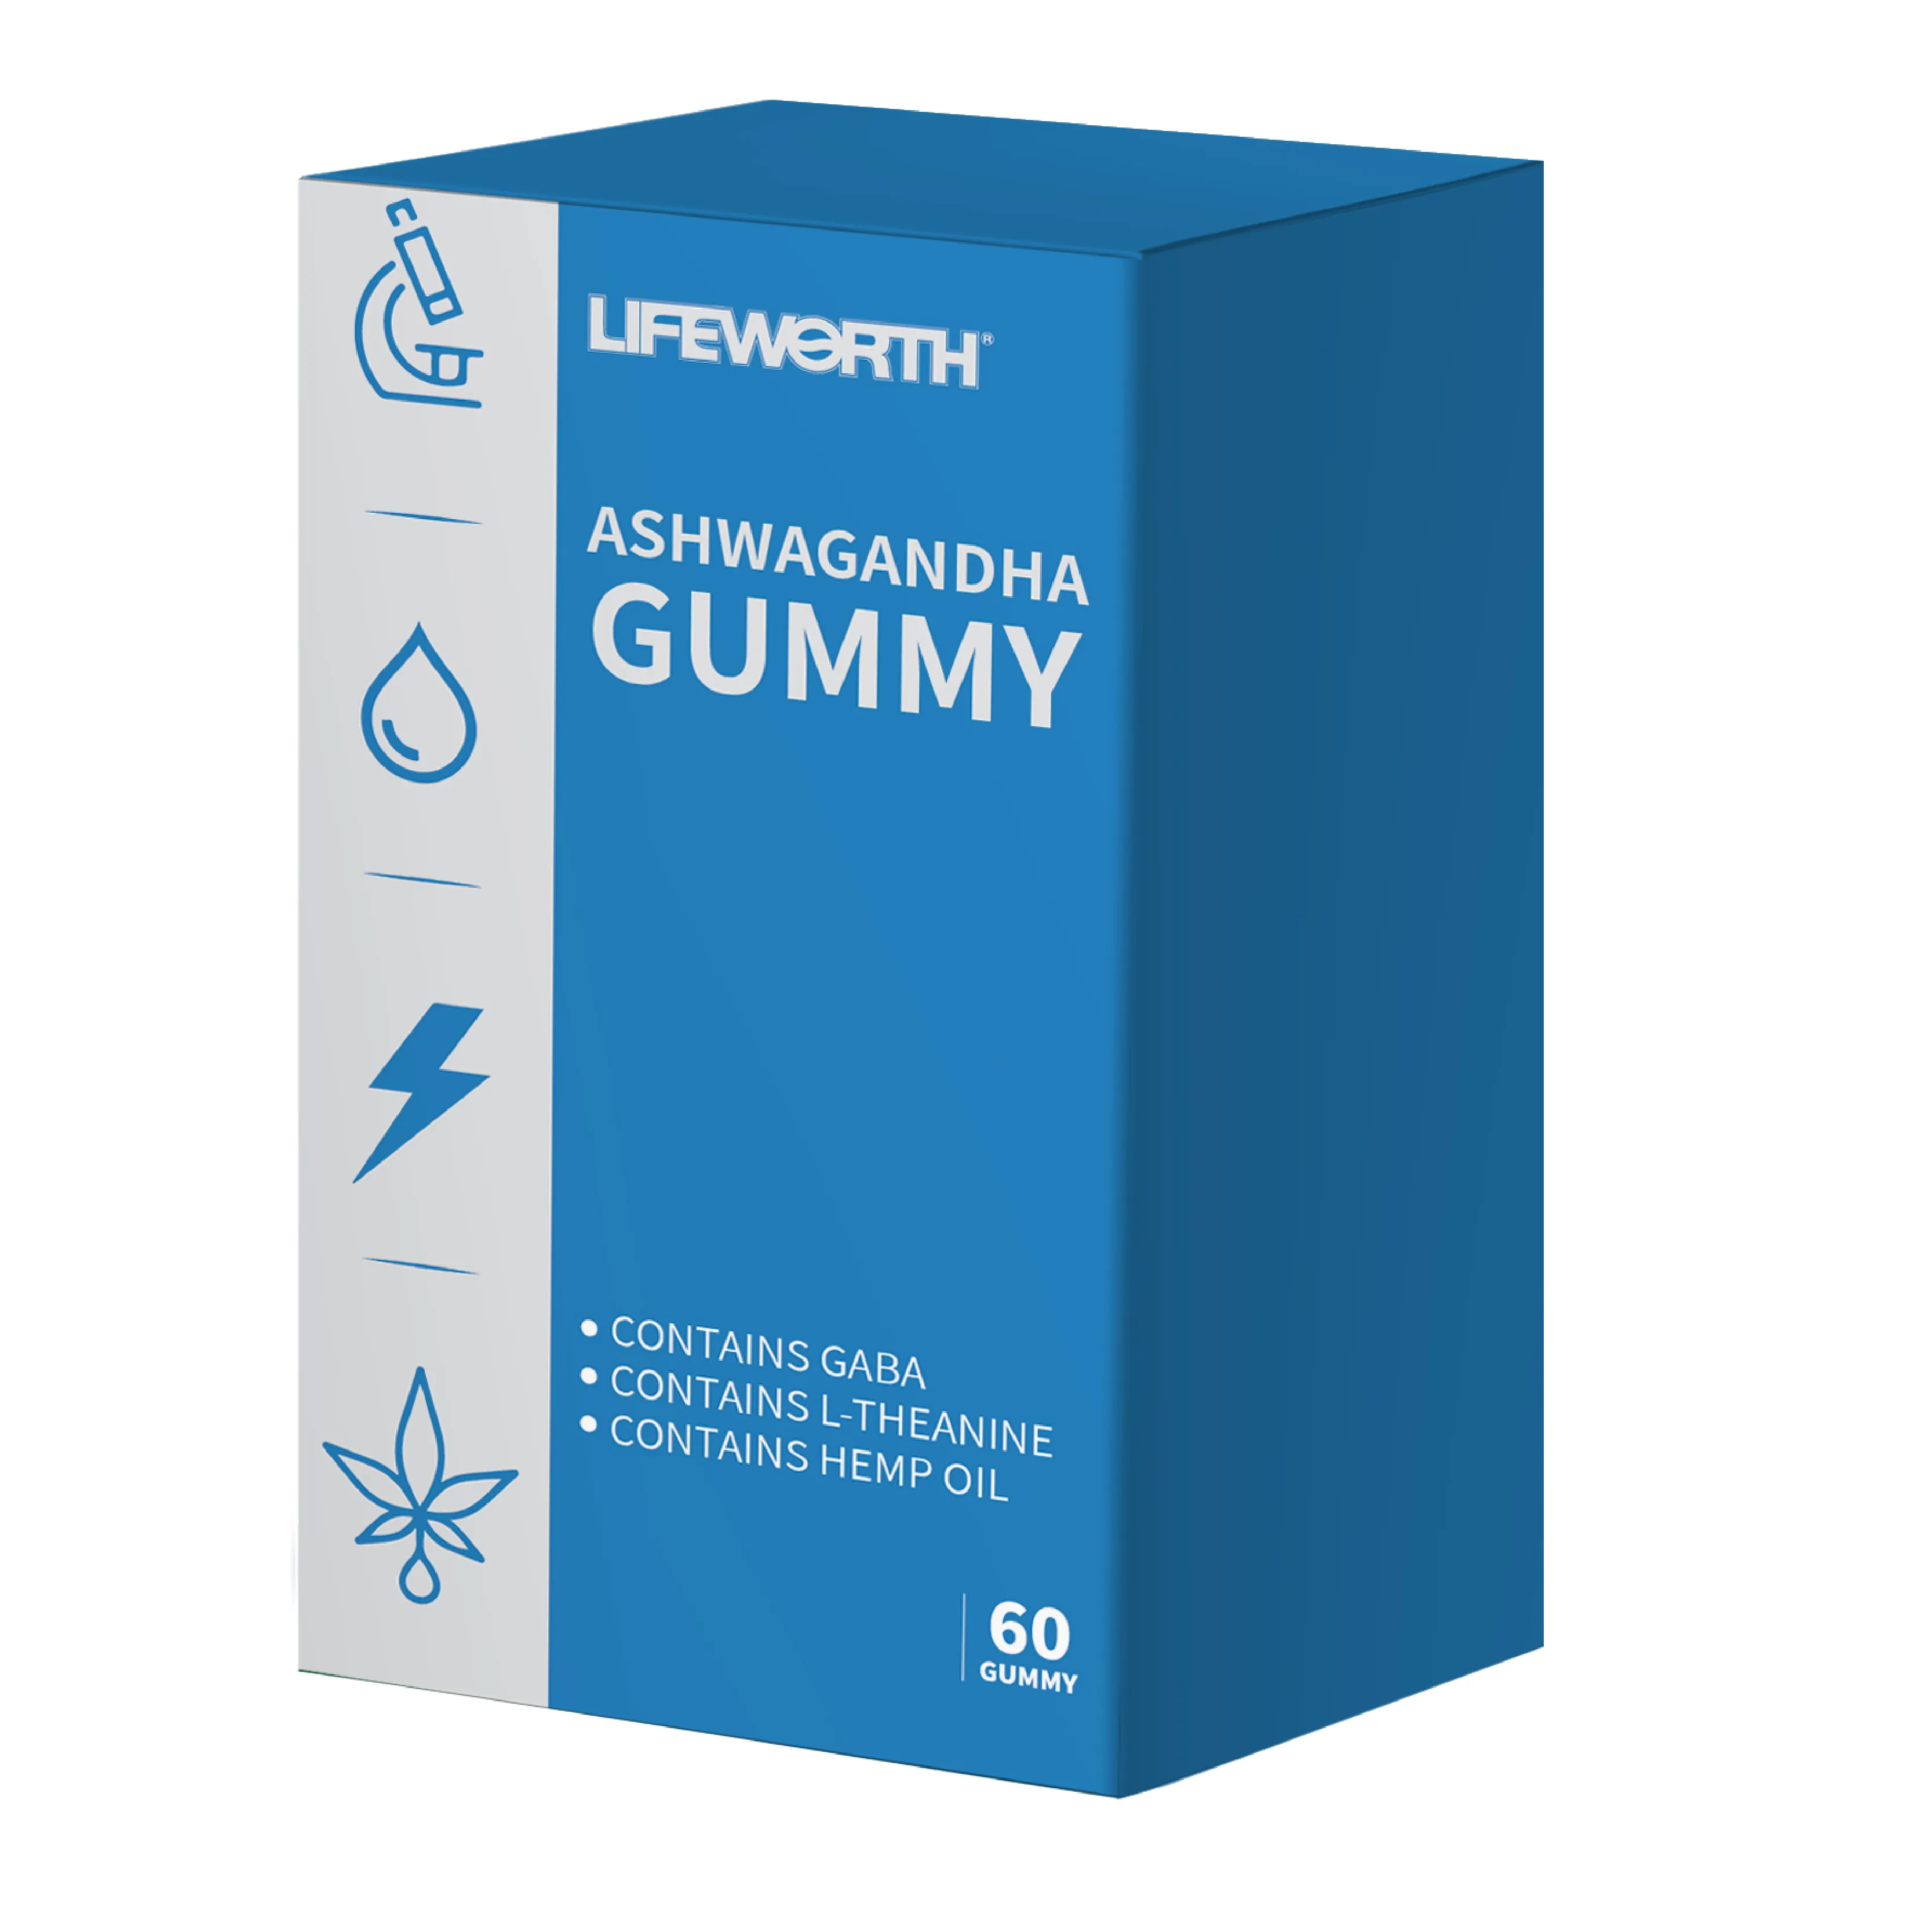 Lifeworth Oem Health Supplement Ashwagandha Gummy Candy Planet Melatonin Gummy